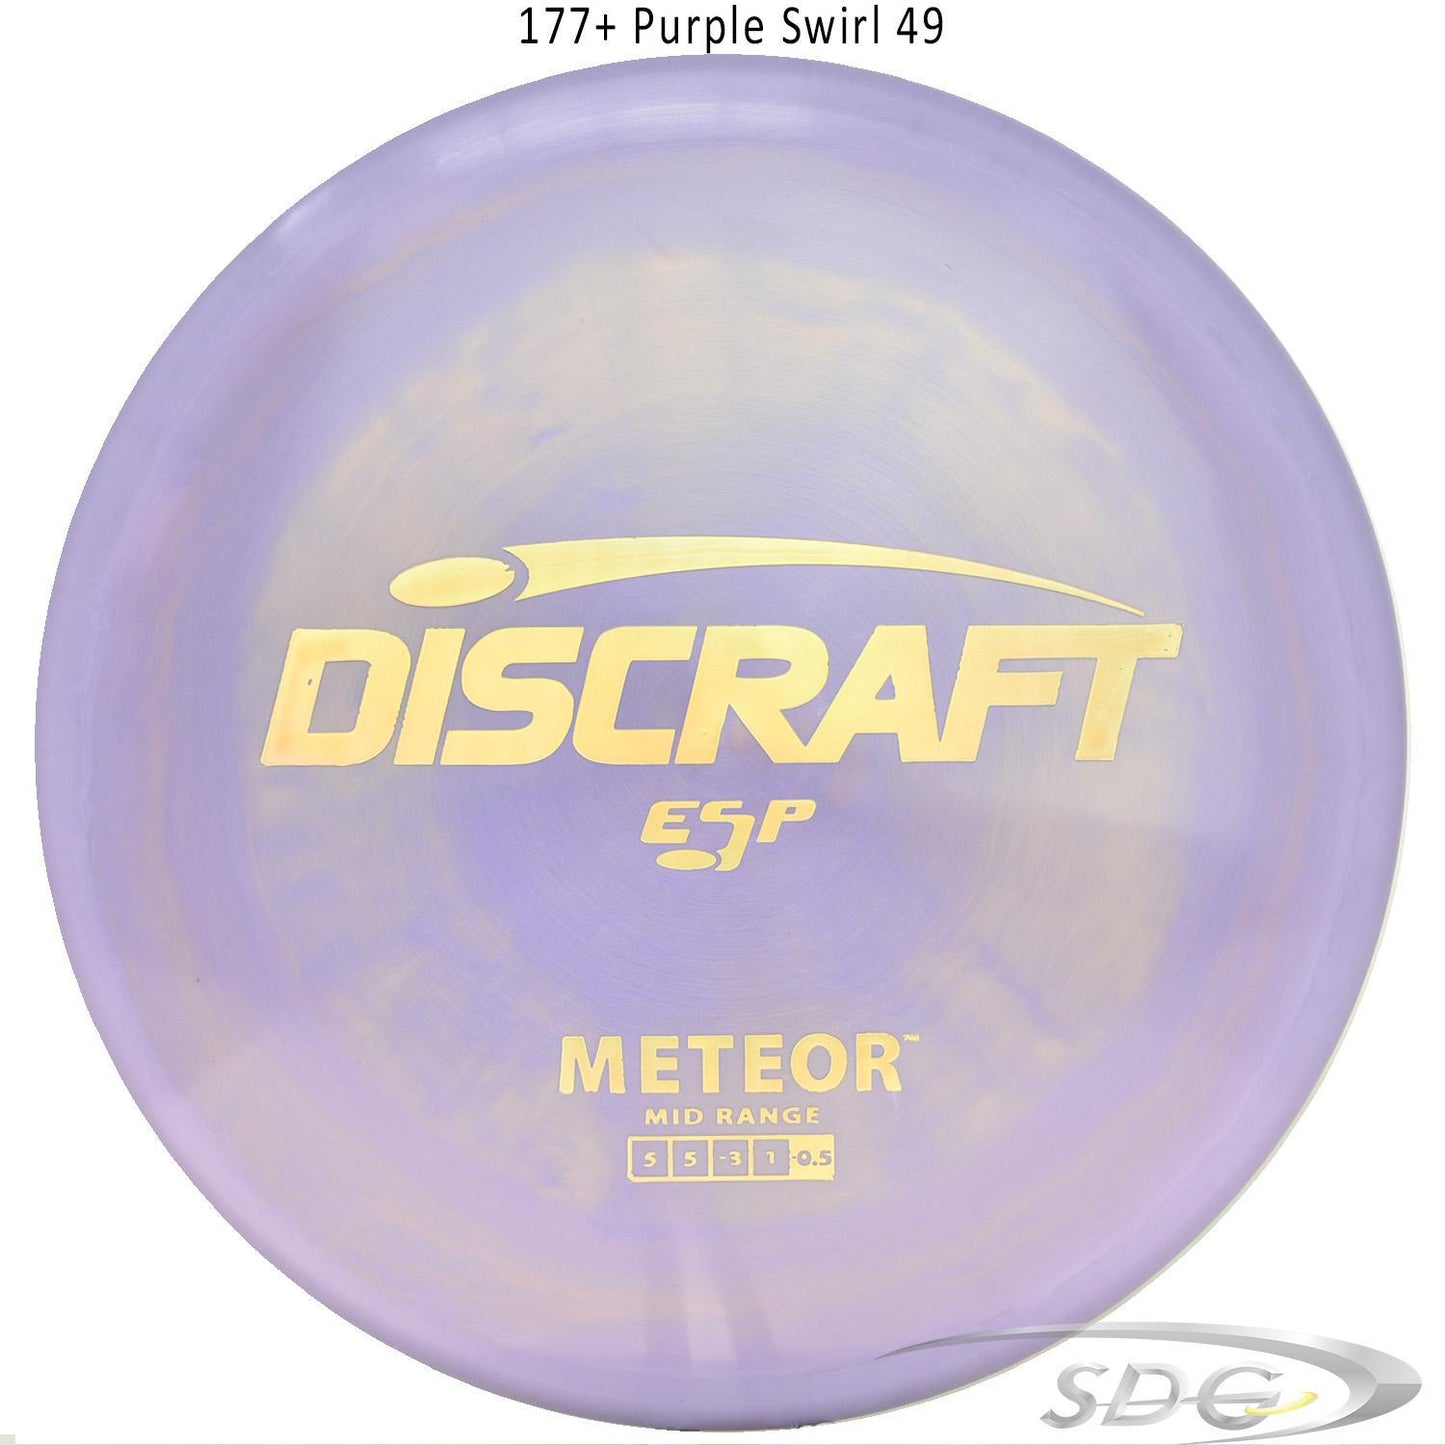 discraft-esp-meteor-disc-golf-mid-range 177+ Purple Swirl 49